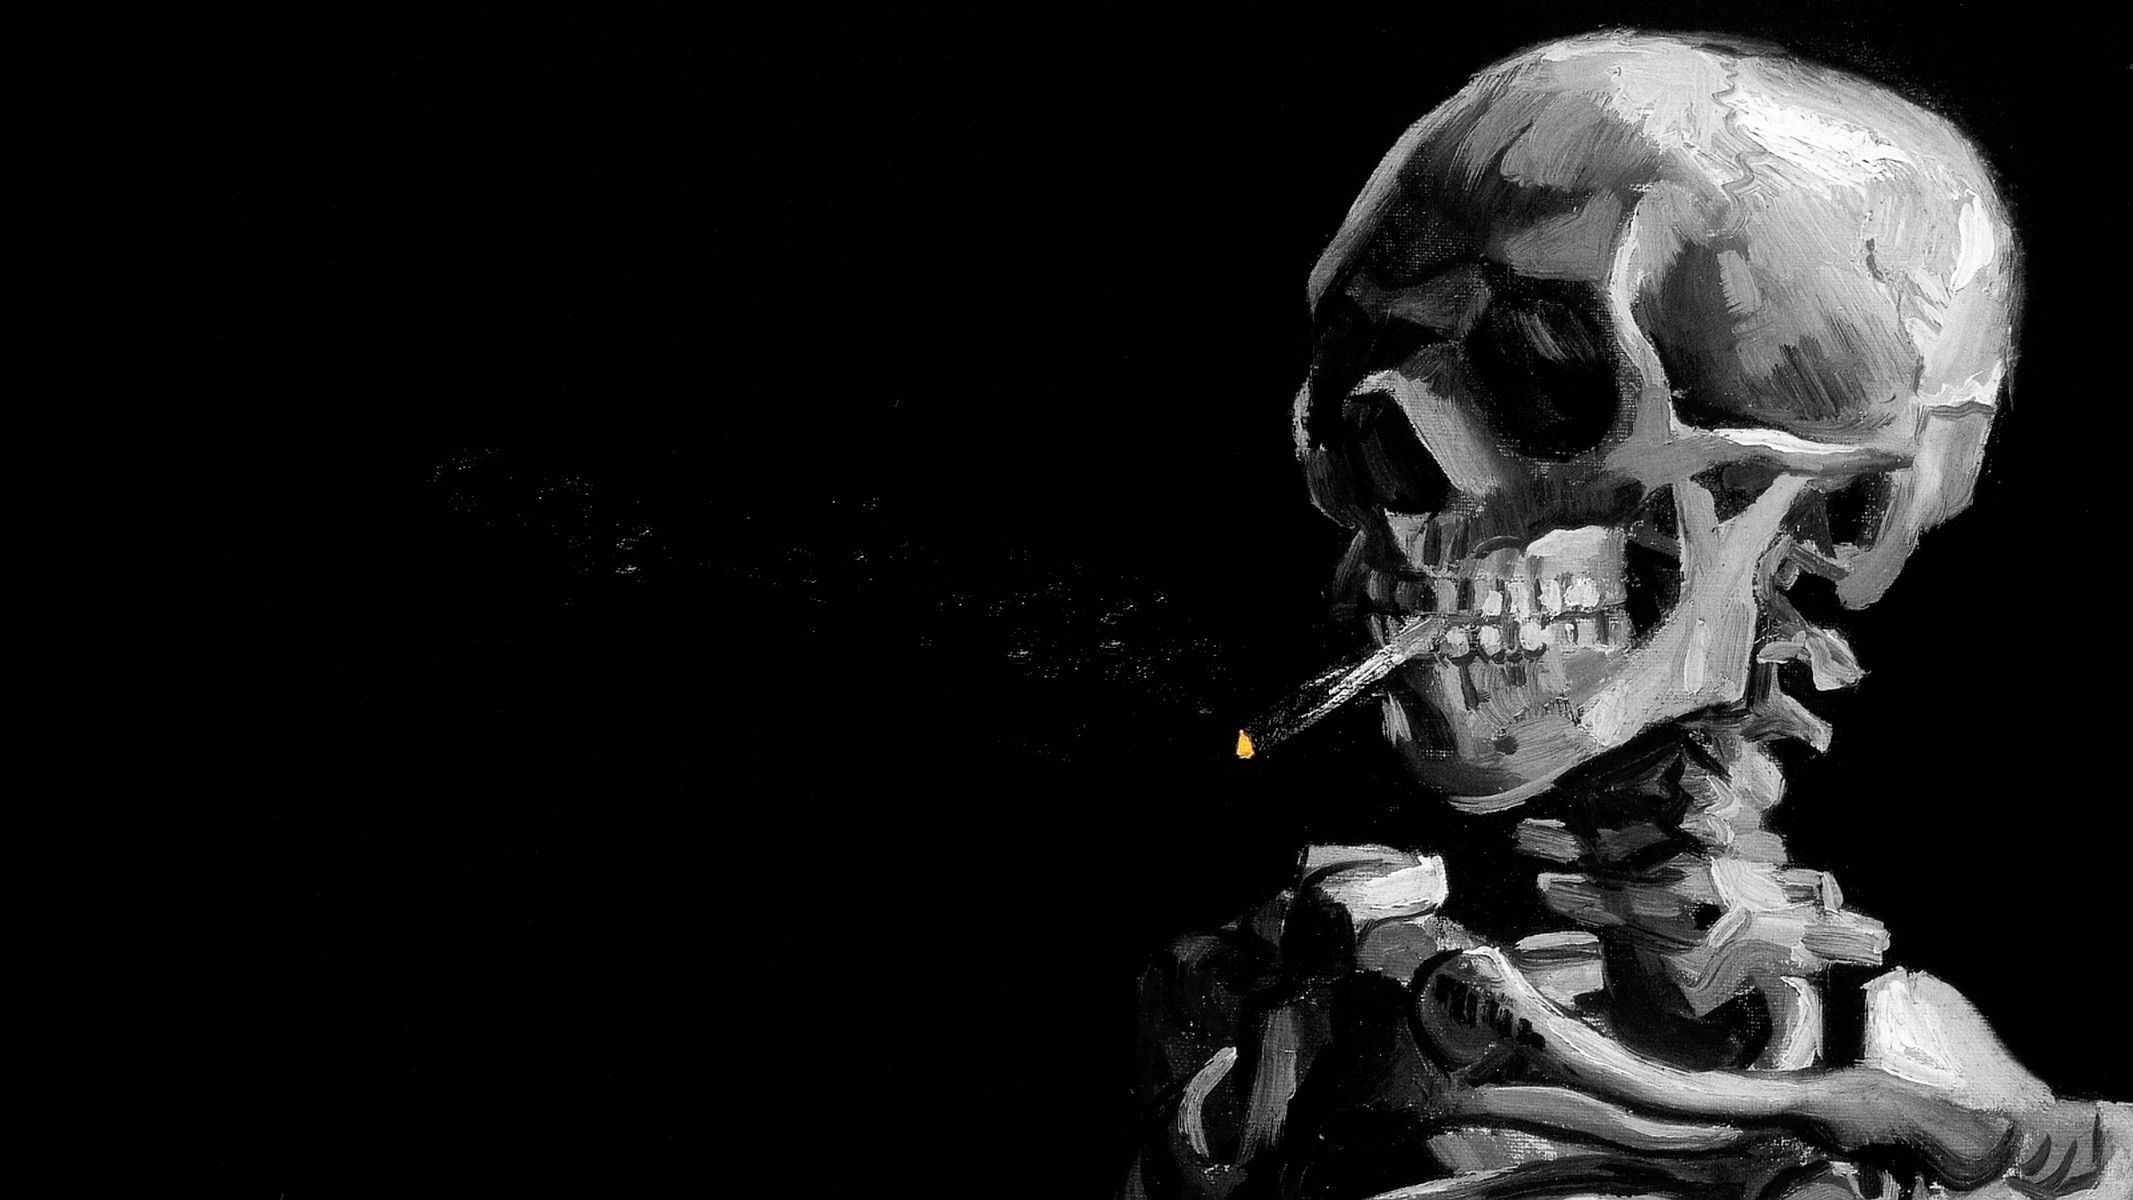 digital Art, Skull, Black Background, Painting, Bones, Spine, Ribs, Teeth, Smoking, Cigarettes, Smoke, Monochrome Wallpaper